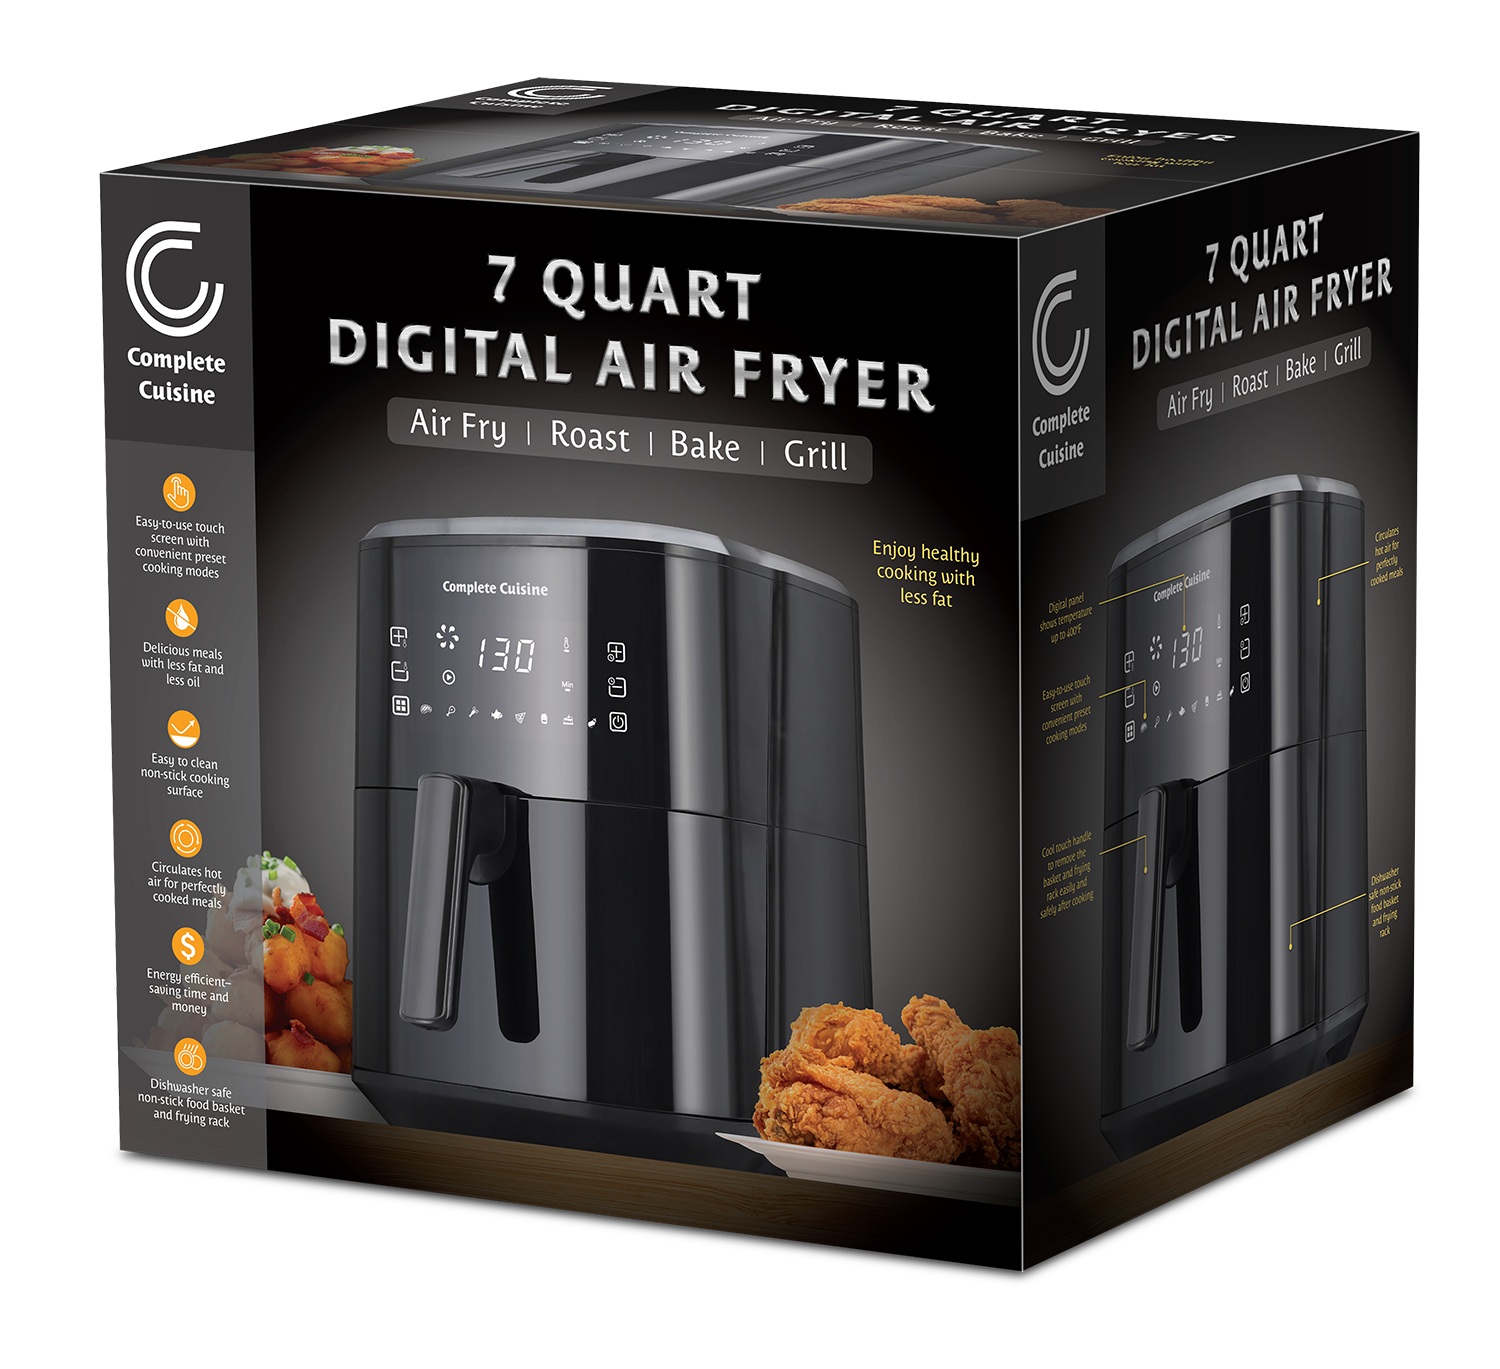 Complete Cuisine 7 Quart Digital Air Fryer